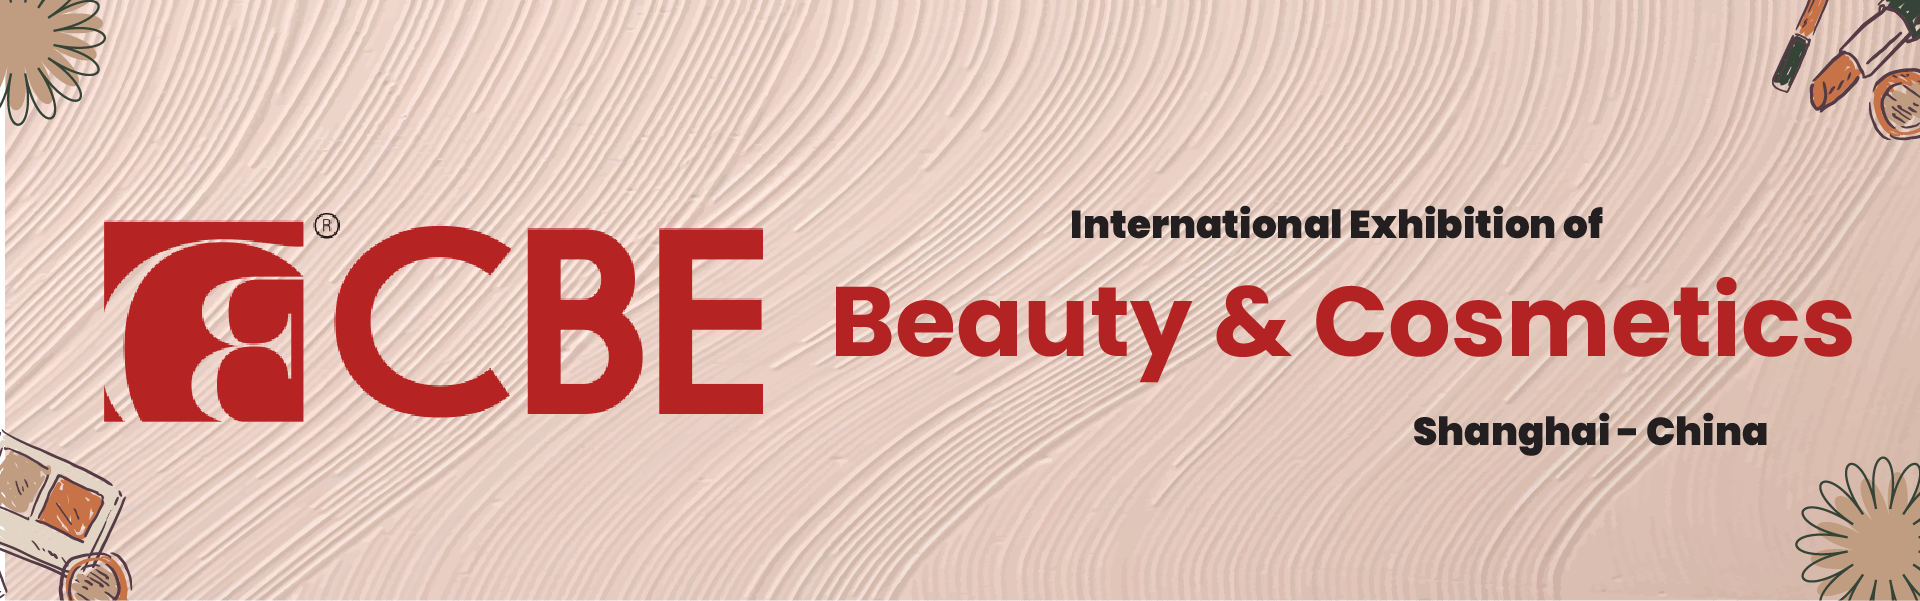 Beauty and Cosmetics Exhibition Shanghai China